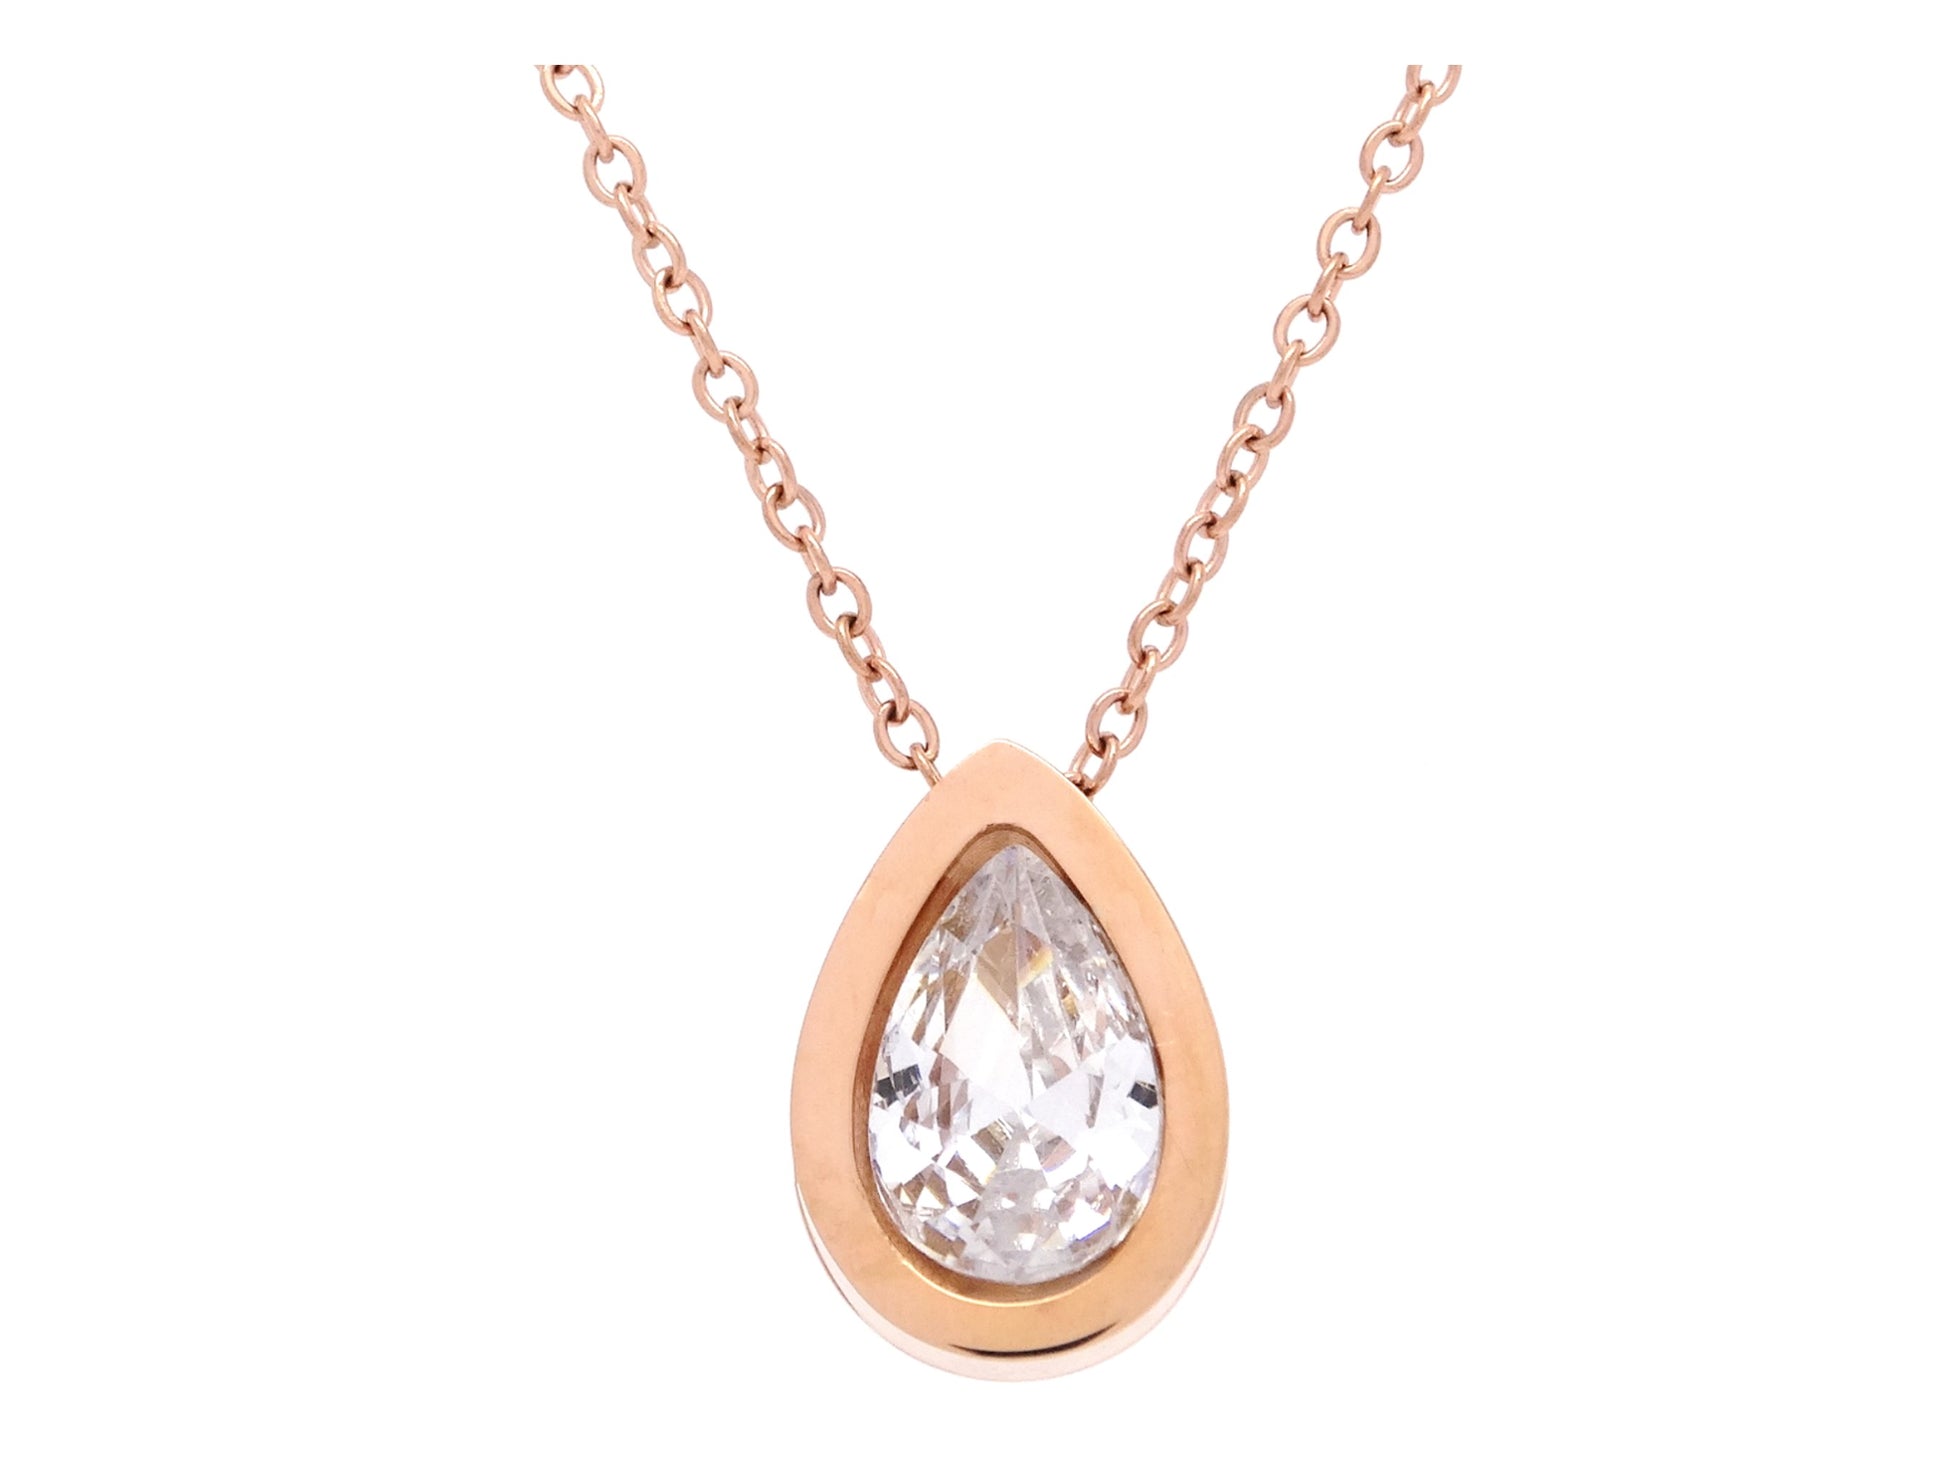 Rose gold pear gemstone pendant necklace MAIN